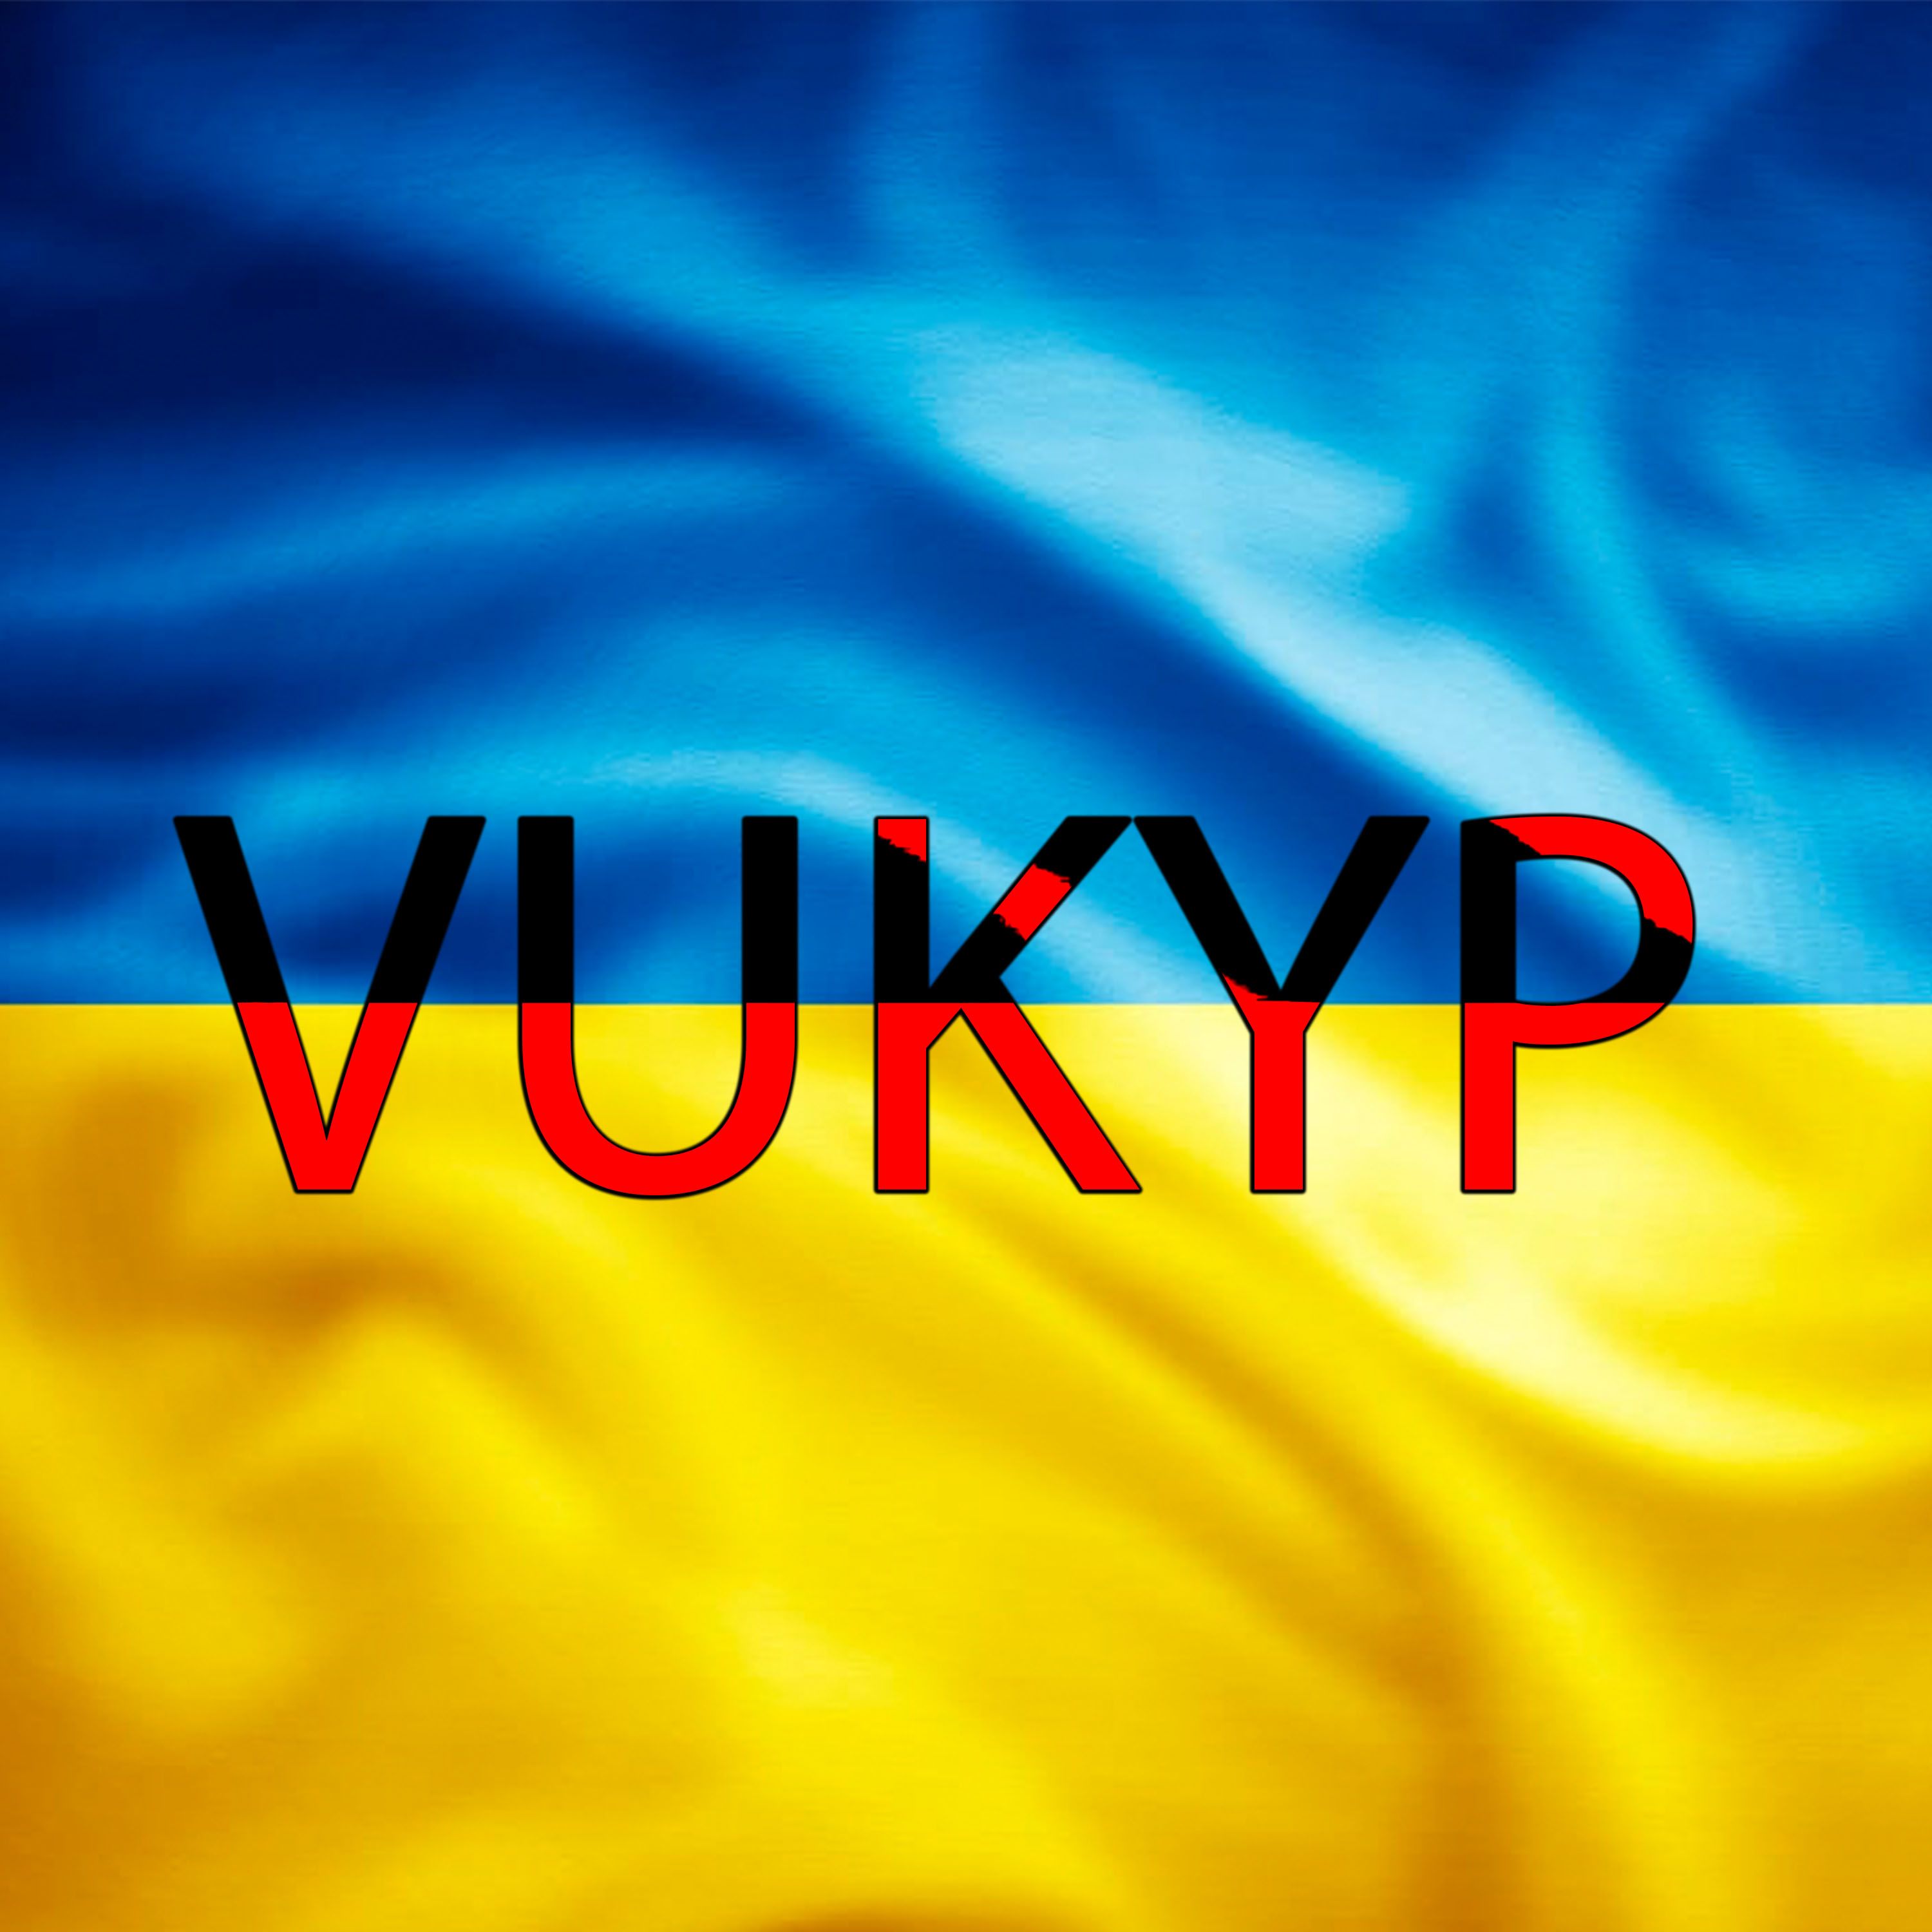 Khoasolla Vukyp - UKR